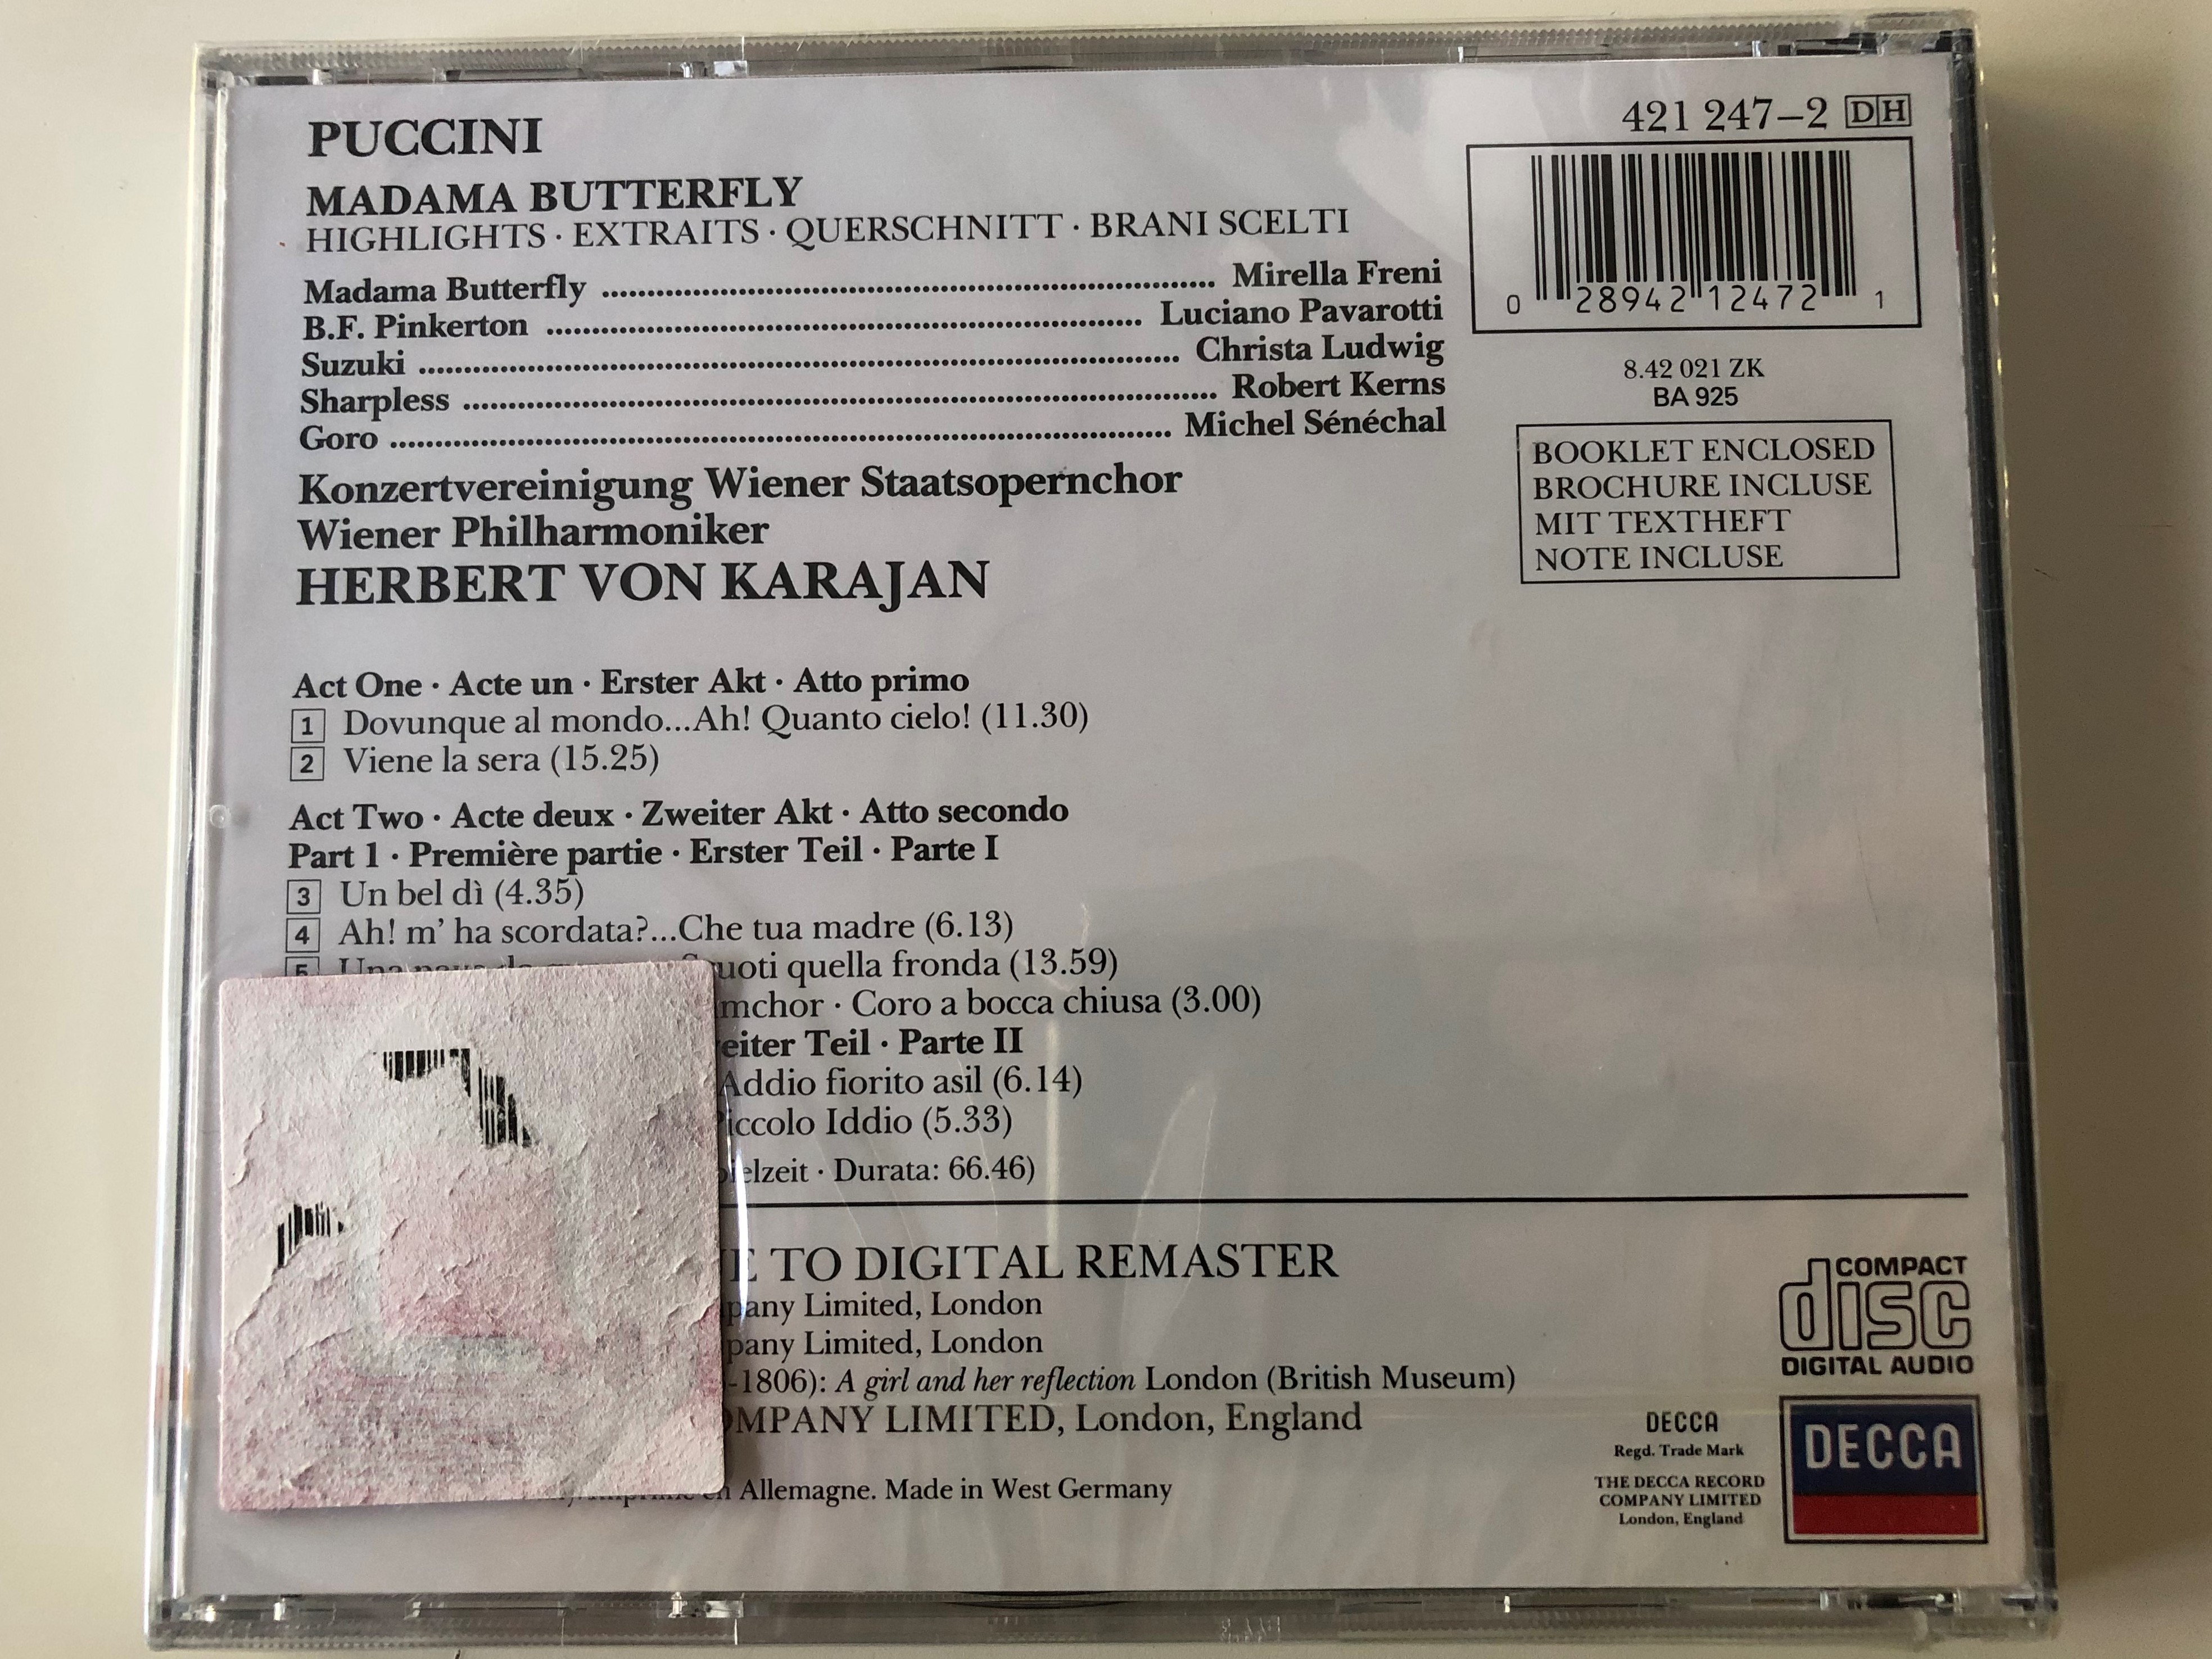 puccini-madama-butterfly-highlights-extraits-querschnitt-brani-scelti-freni-pavarotti-ludwig-kerns-wiener-philharmoniker-herbert-von-karajan-decca-audio-cd-1989-421-247-2-2-.jpg